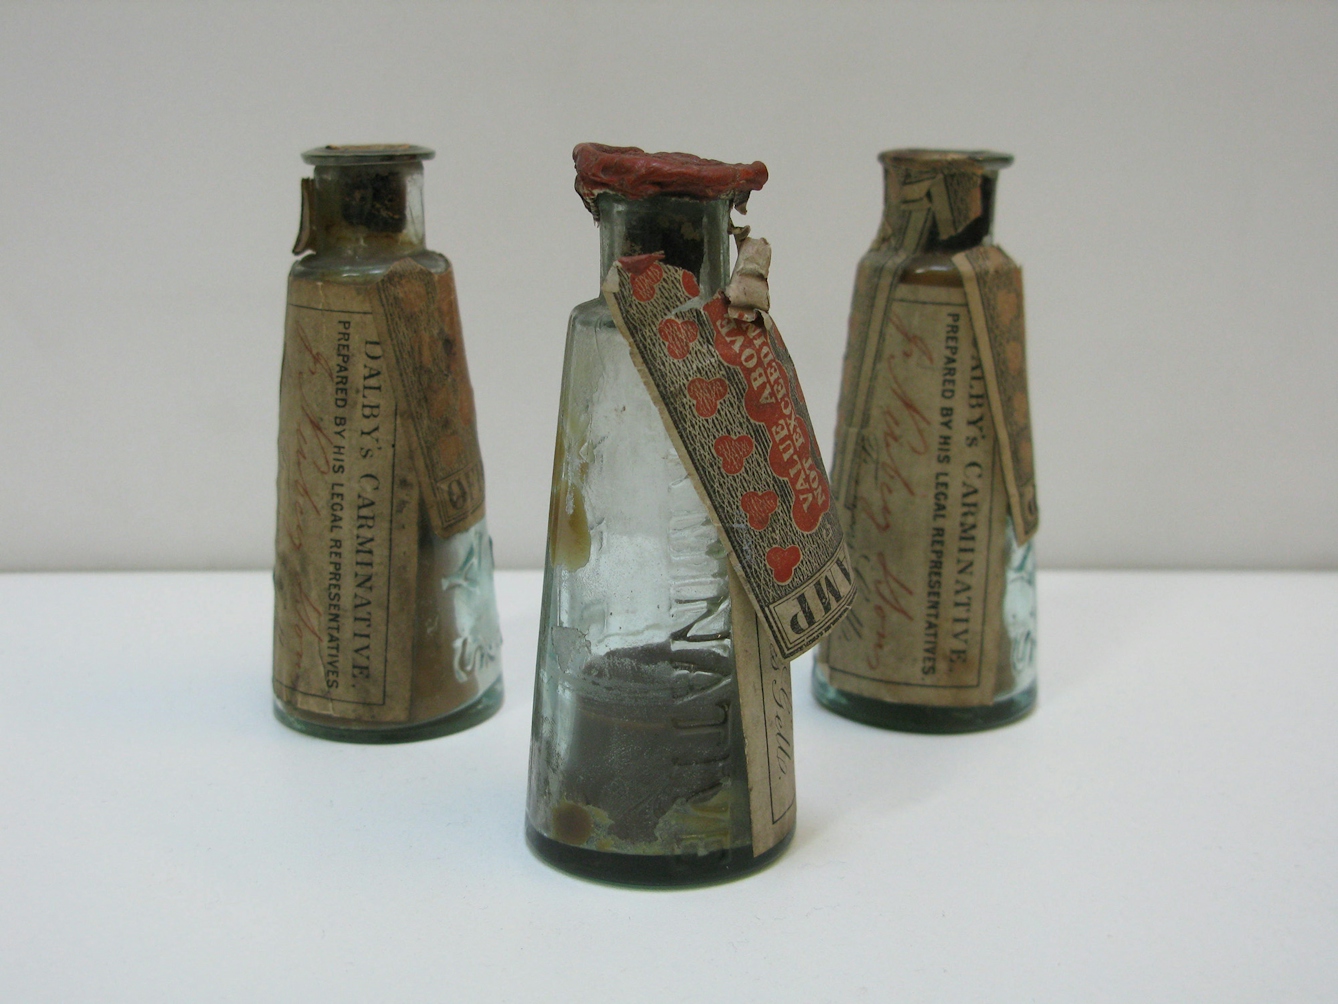 Bottles of Dalby's Carminative 